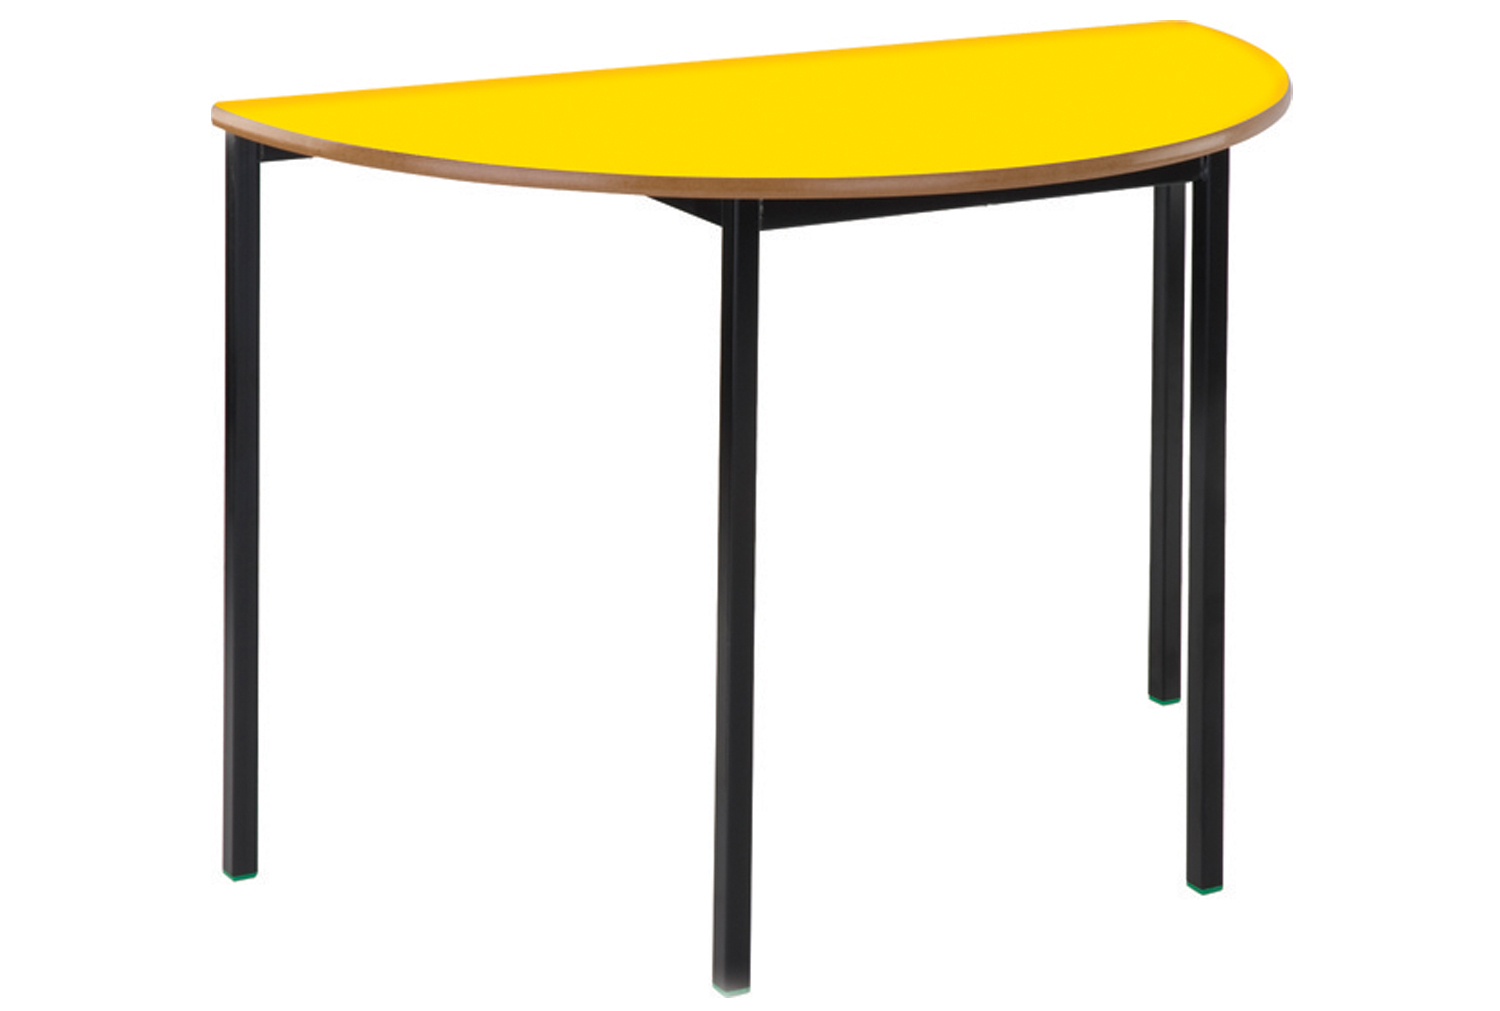 Qty 4 - Semi-Circular Fully Welded Classroom Tables 14+ Years, 120diax76h (cm), Light Grey Frame, Grey Top, PU Grey Edge